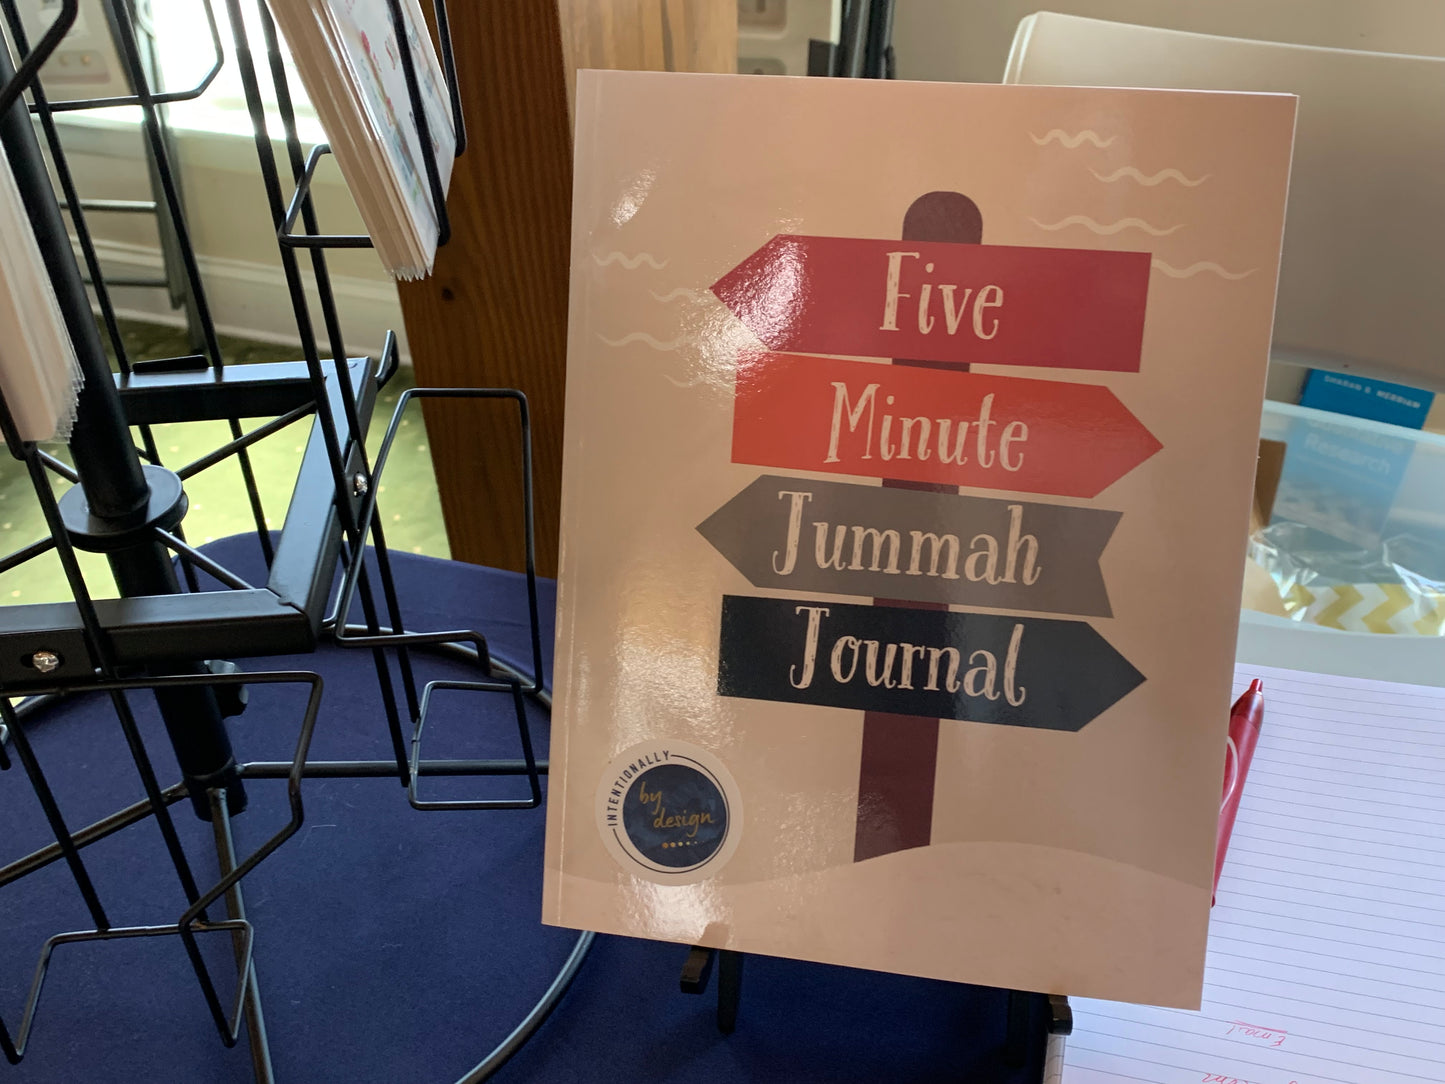 Five Minute Jummah Journal for Young Muslims